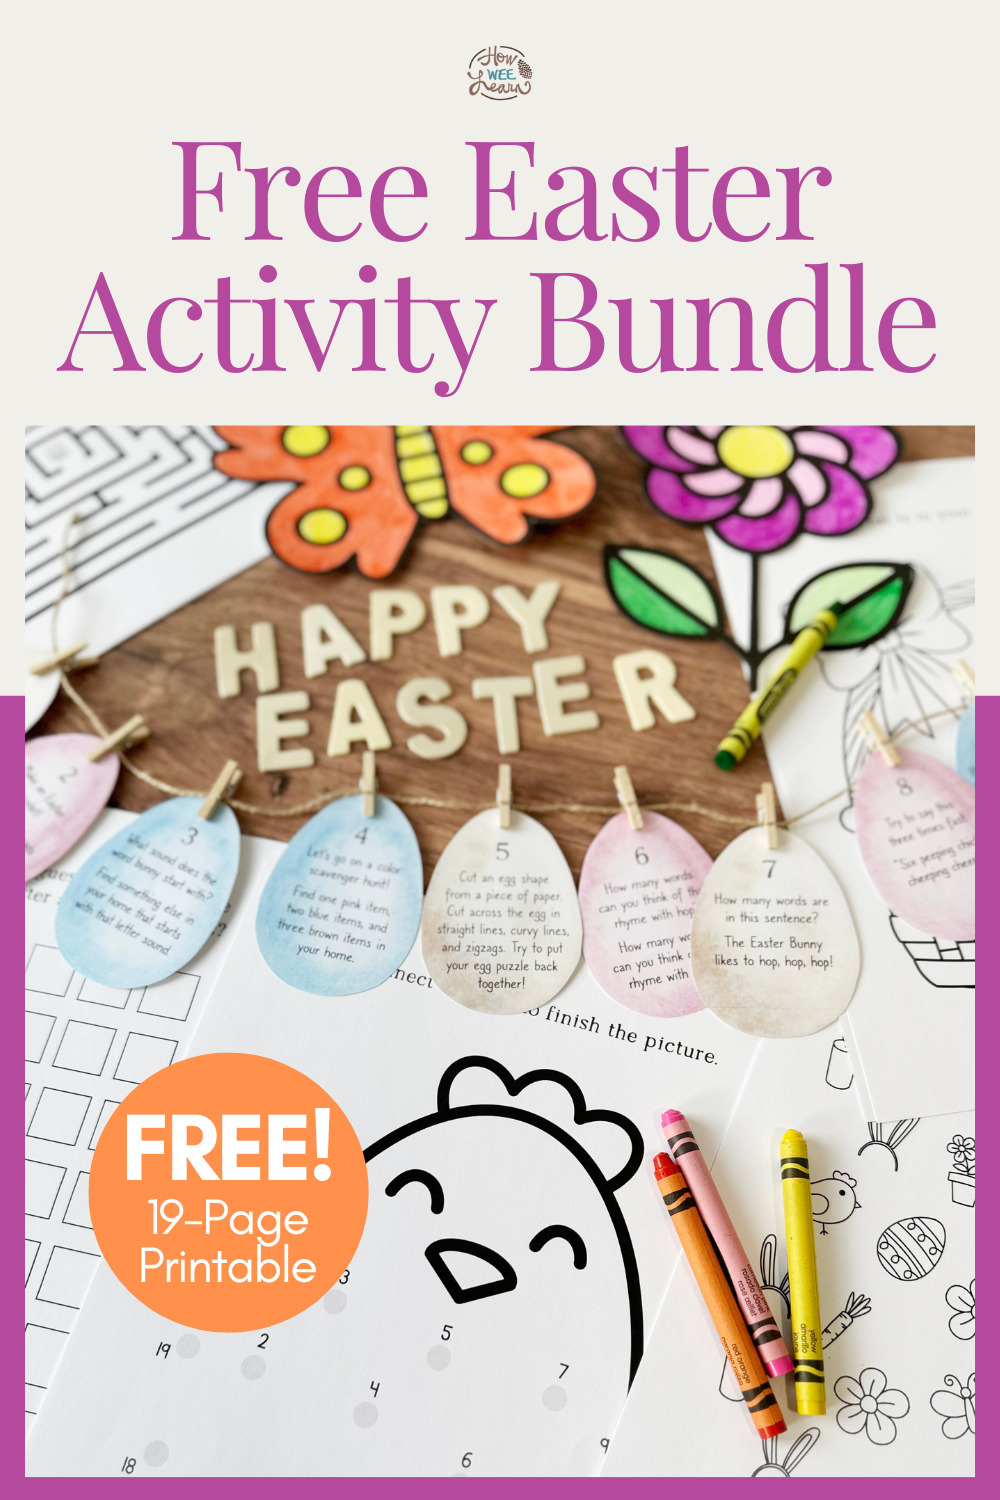 FREE Printable Easter Activity Bundle